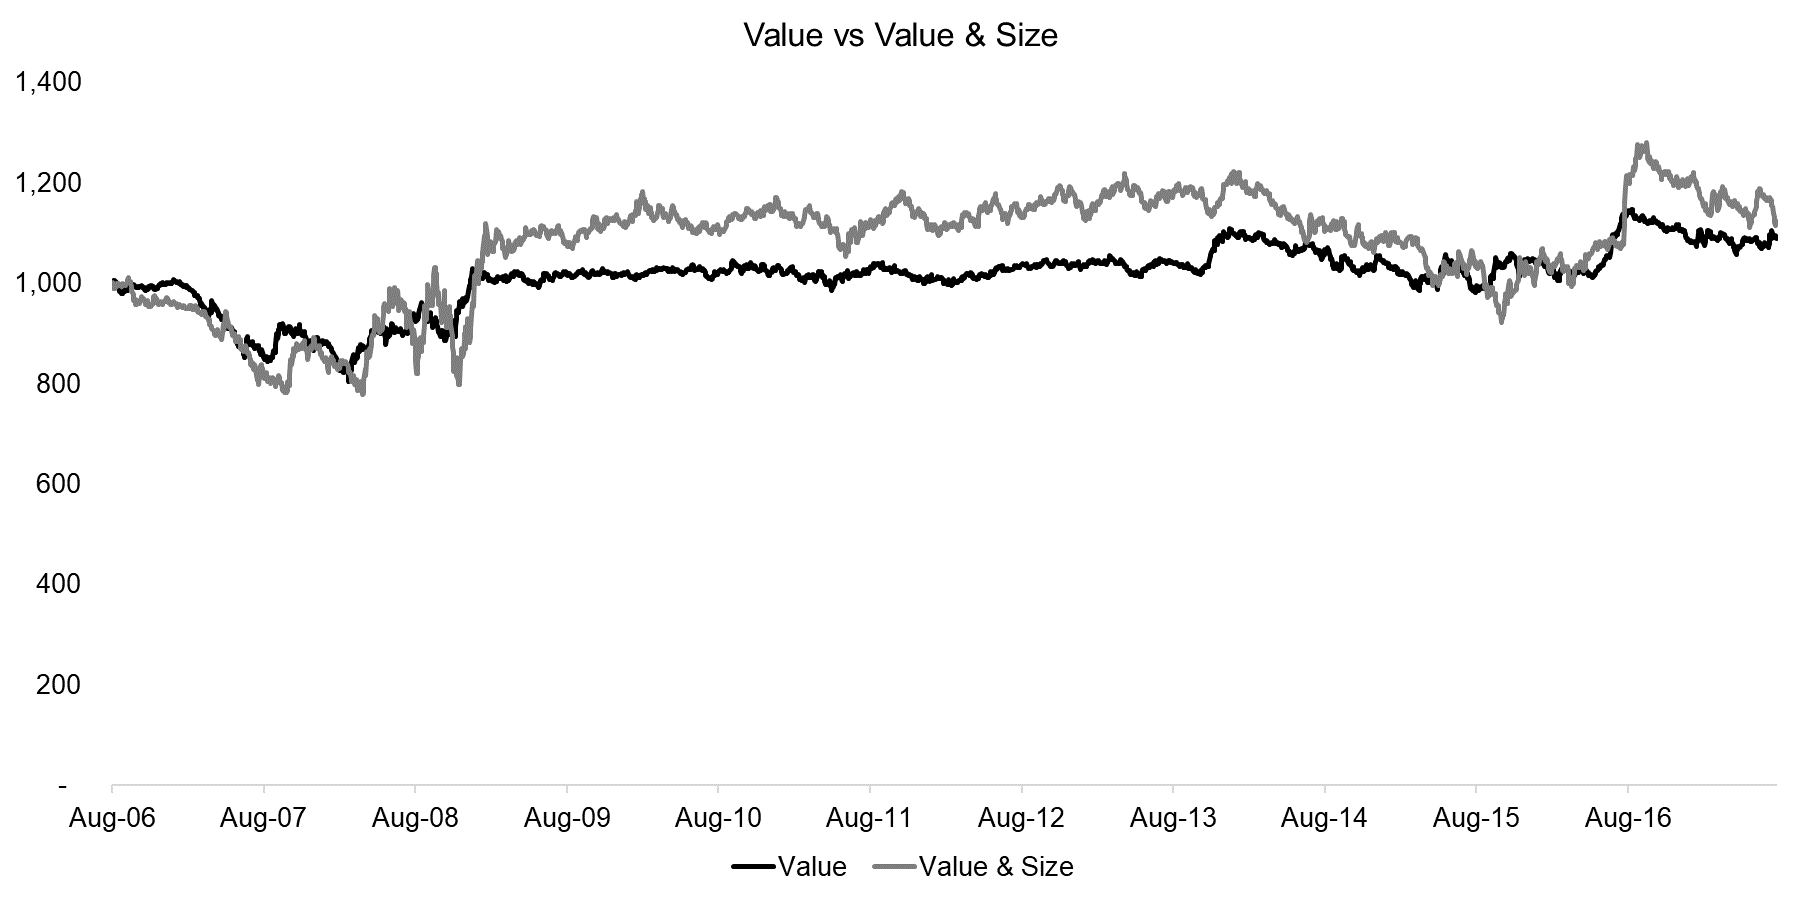 Value vs Value & Size